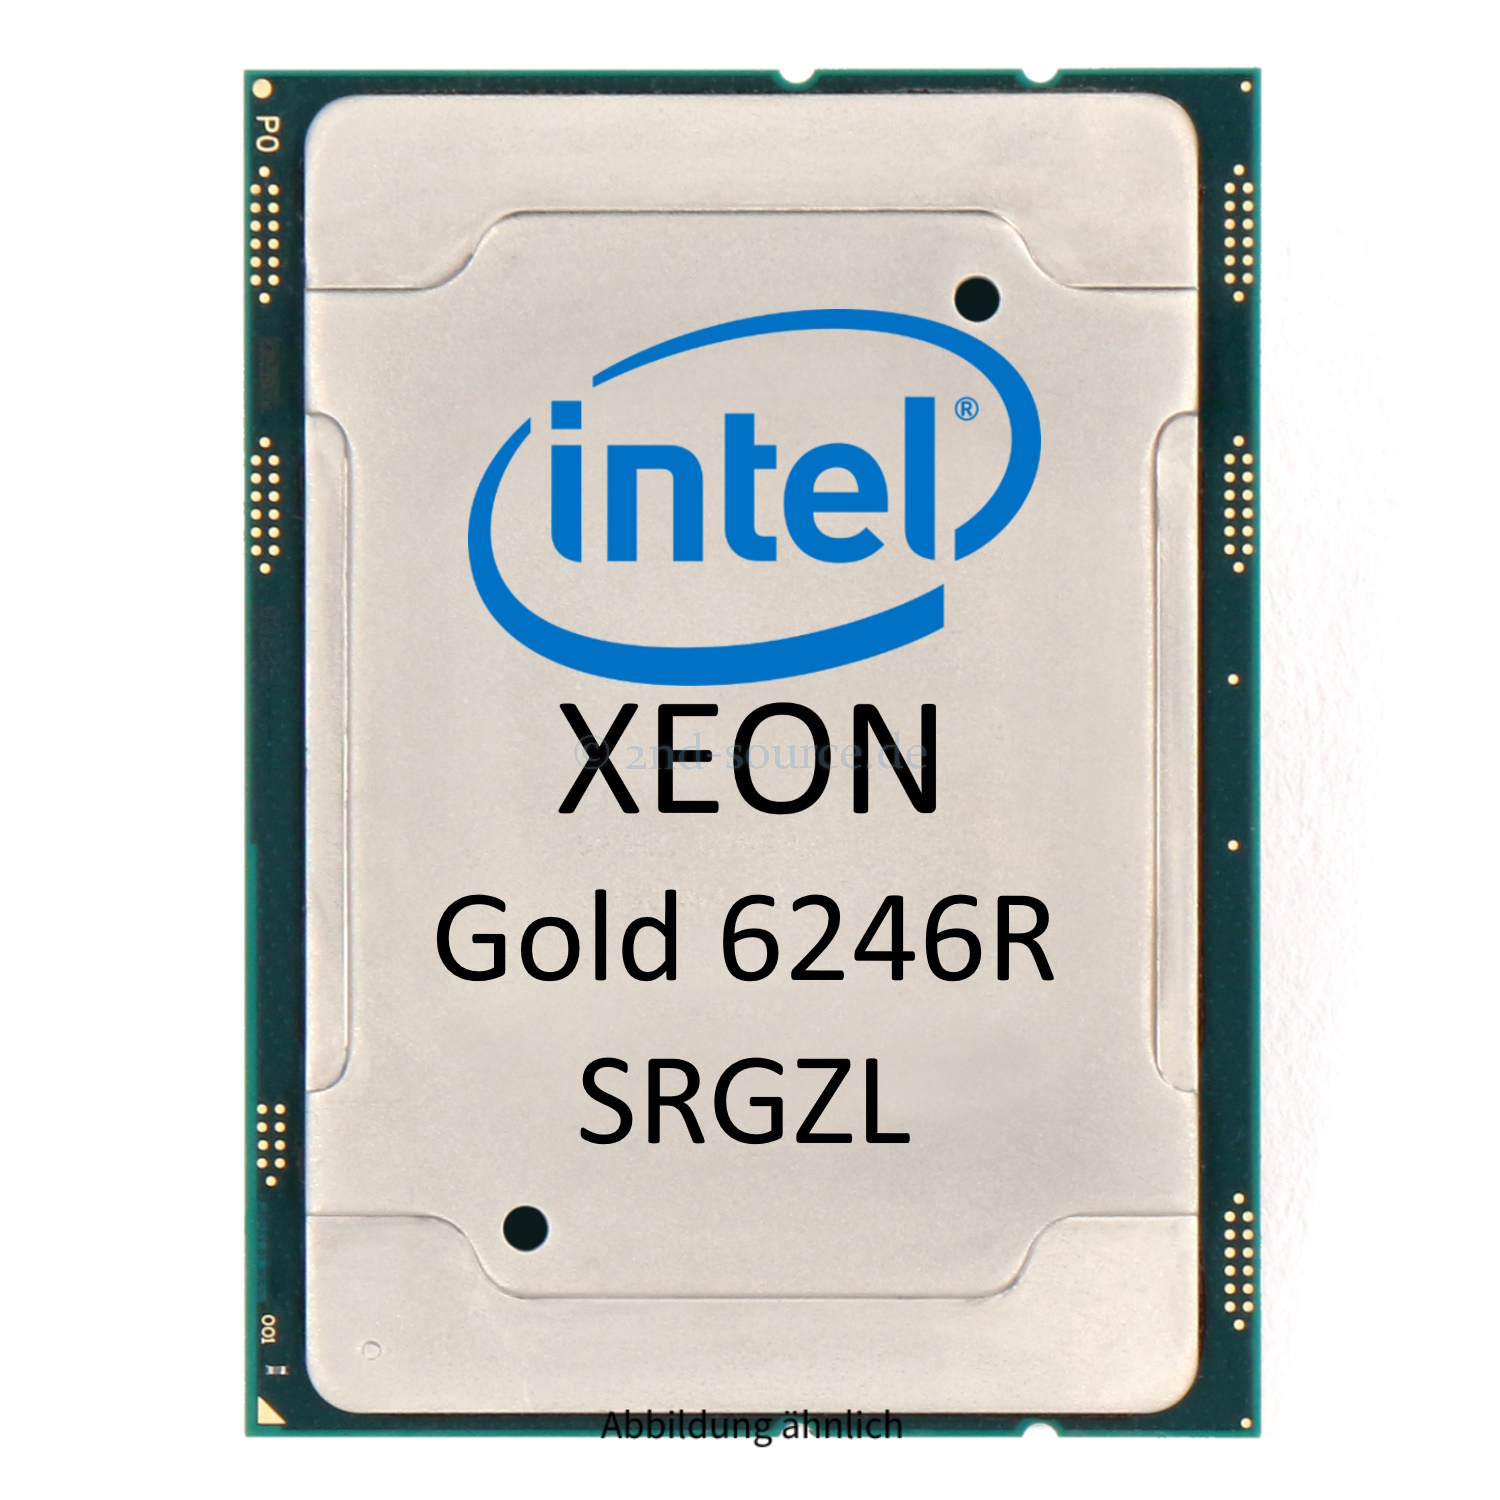 Intel Xeon Gold 6246R 3.40GHz 35.75MB 16-Core CPU 205W SRGZL CD8069504449801